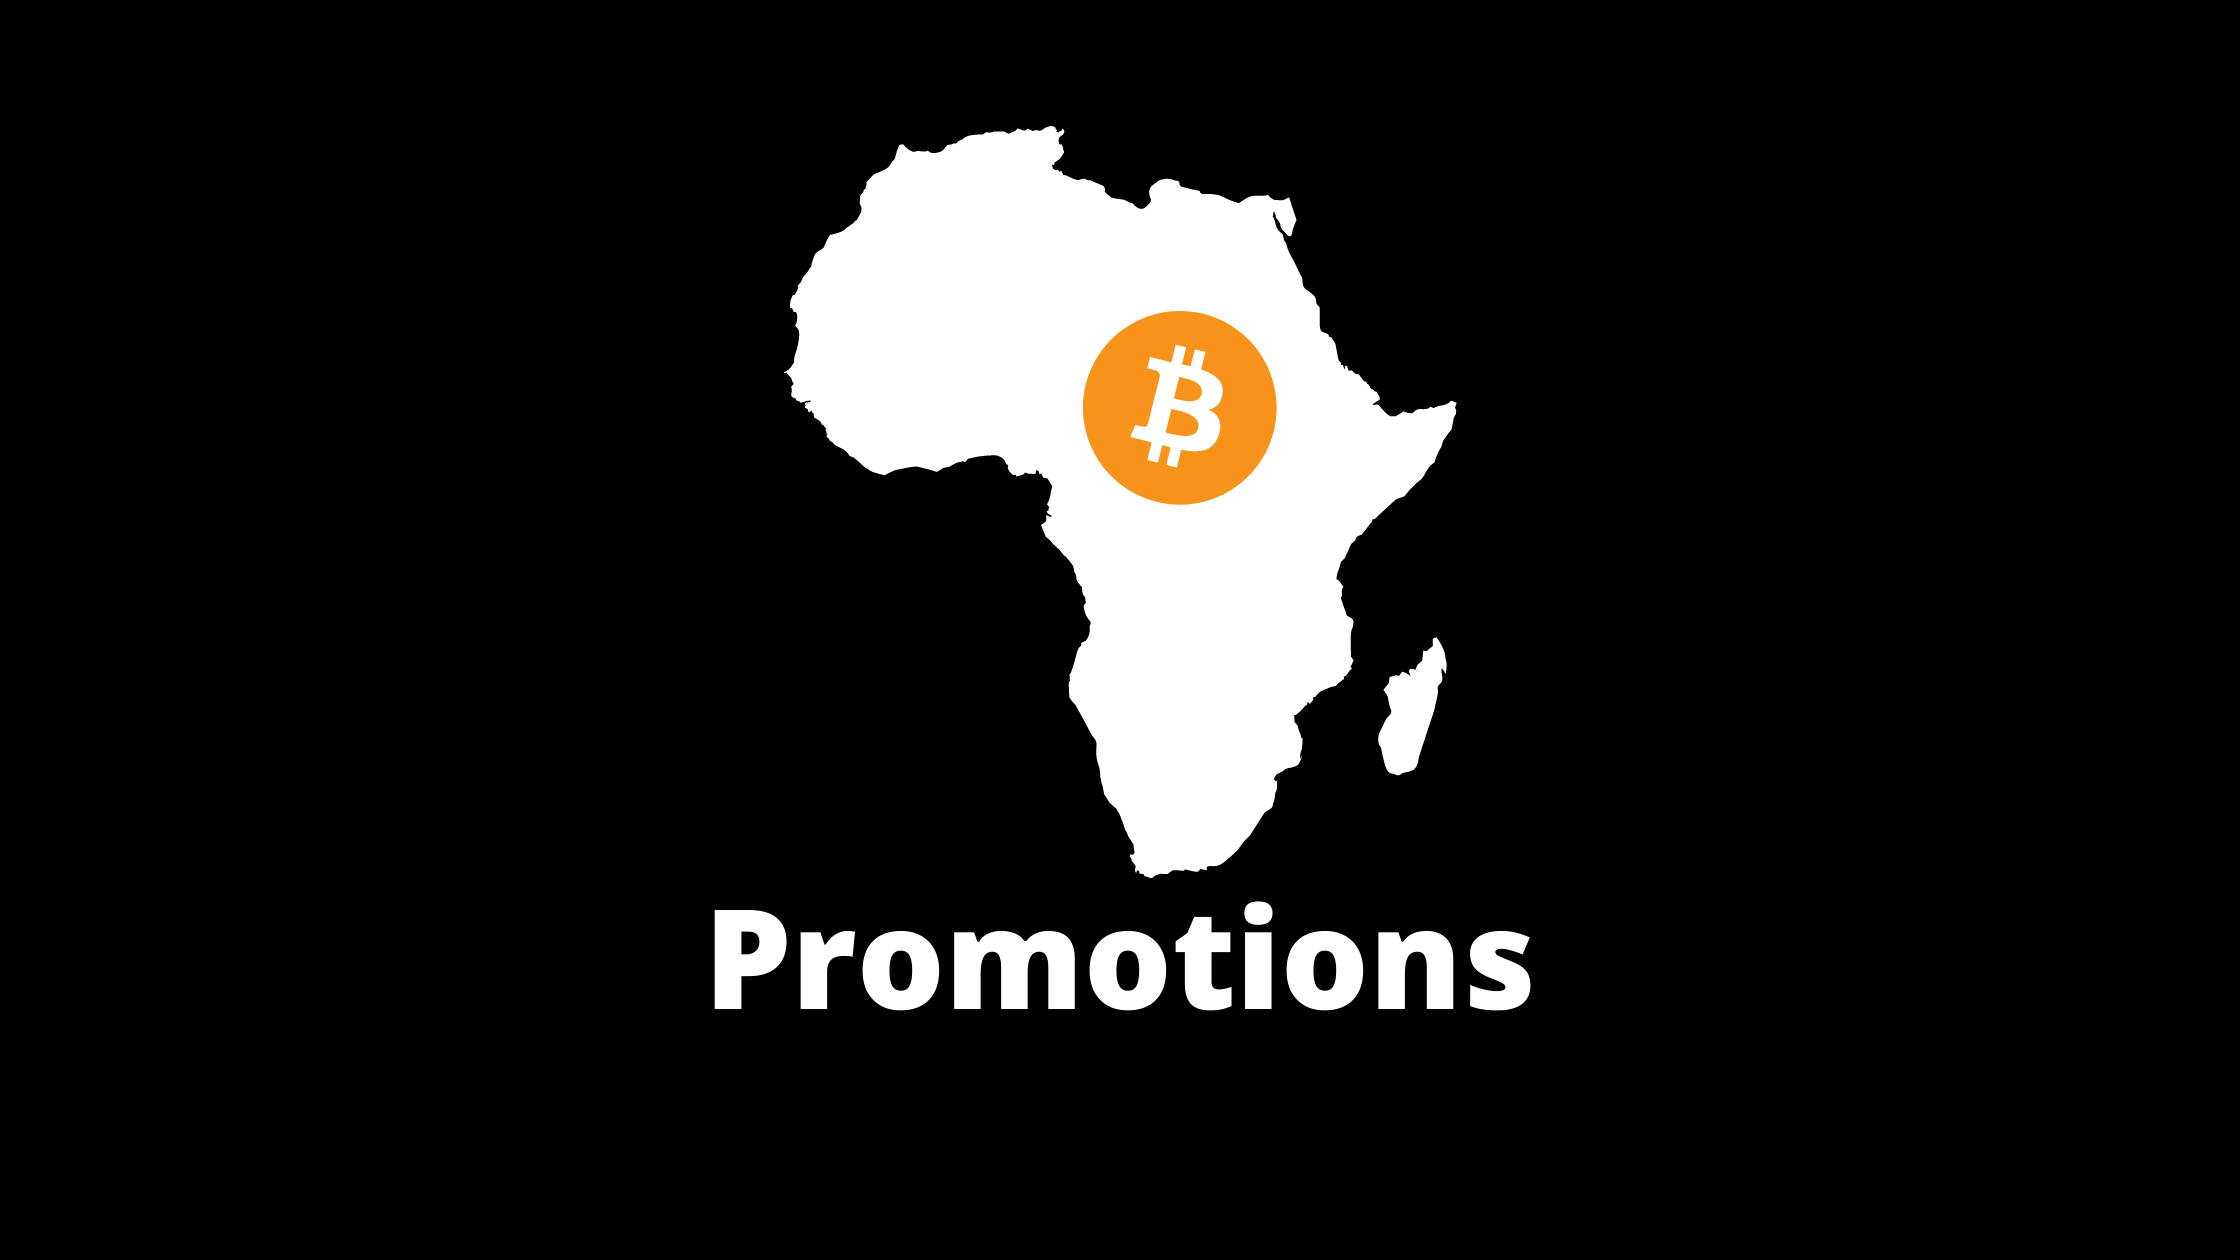 africa sms bitcoin 2014